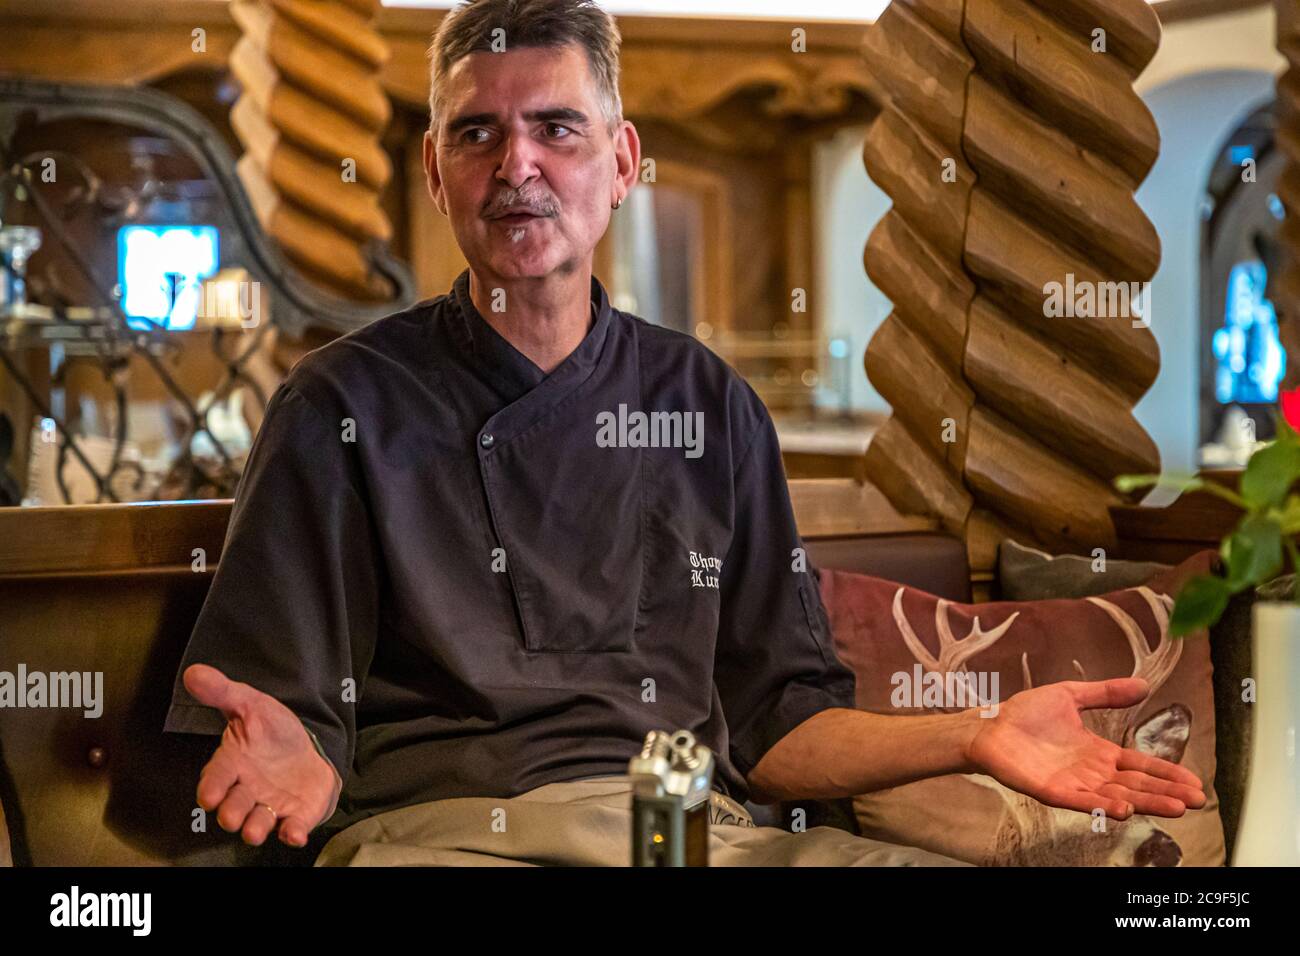 Kitchen Chef of Hotel Singer in Berwang, Austria Stock Photo